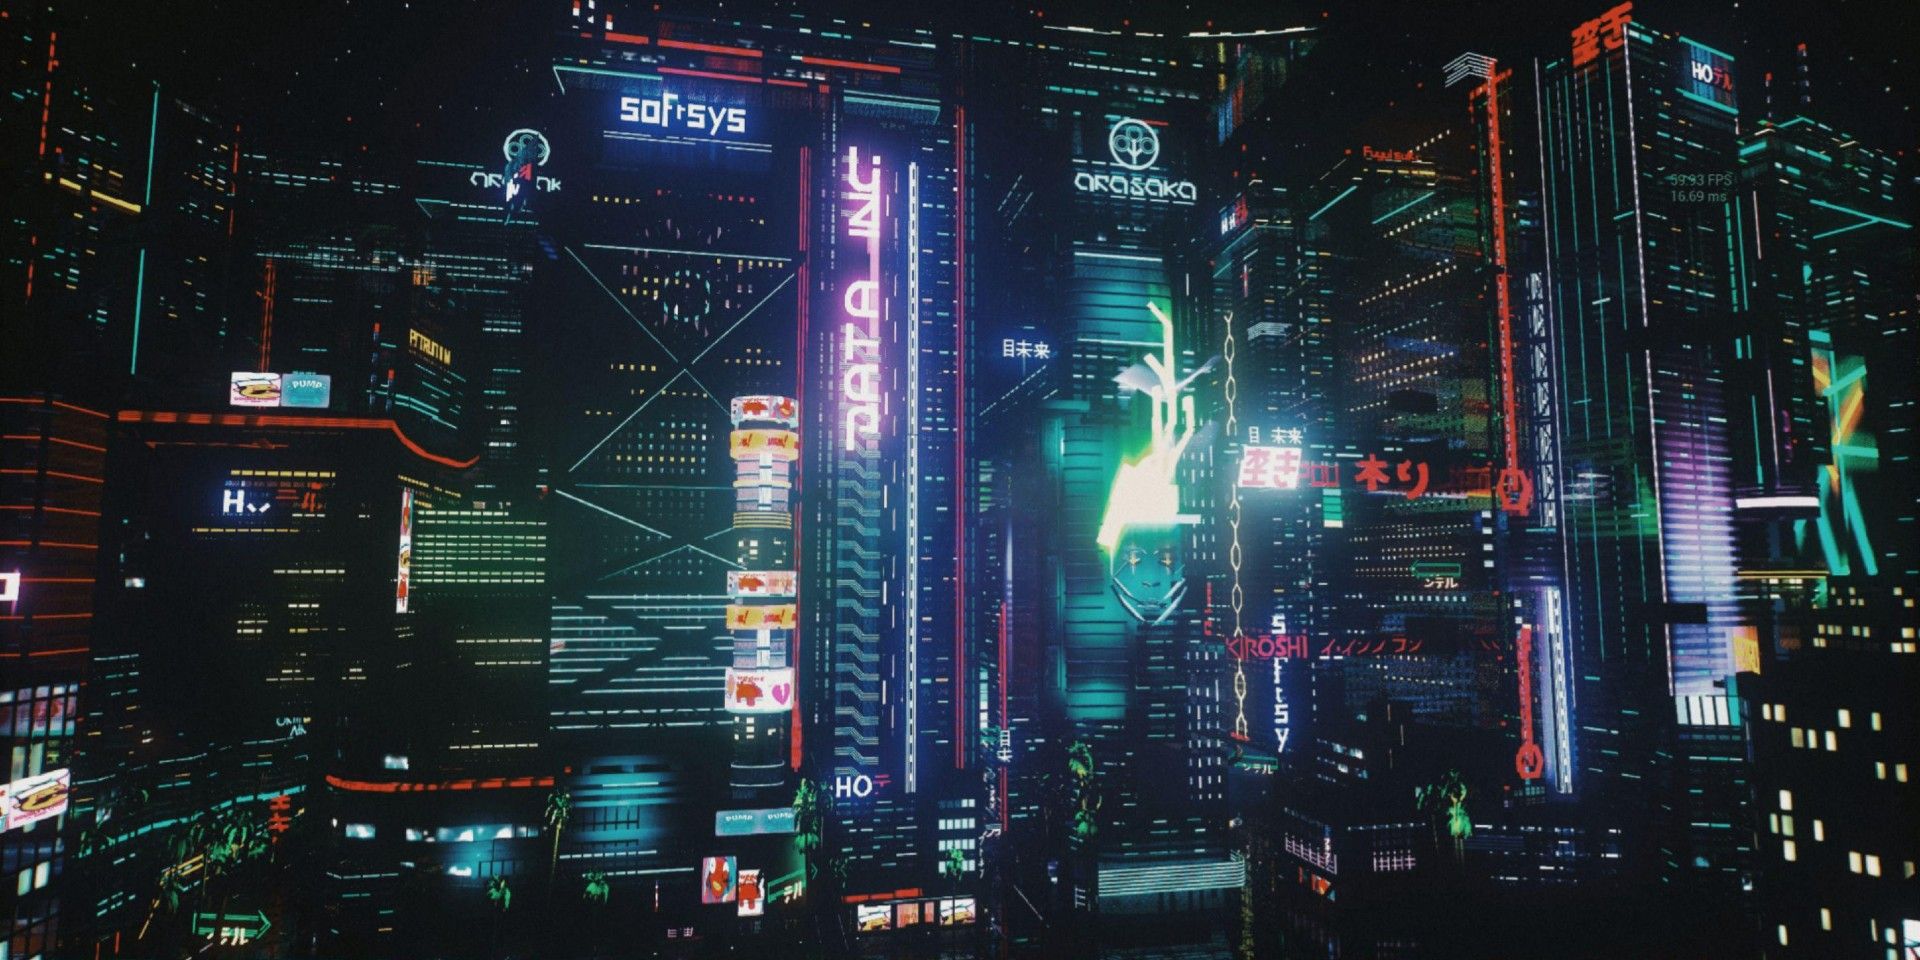 cyberpunk night city Wallpapers